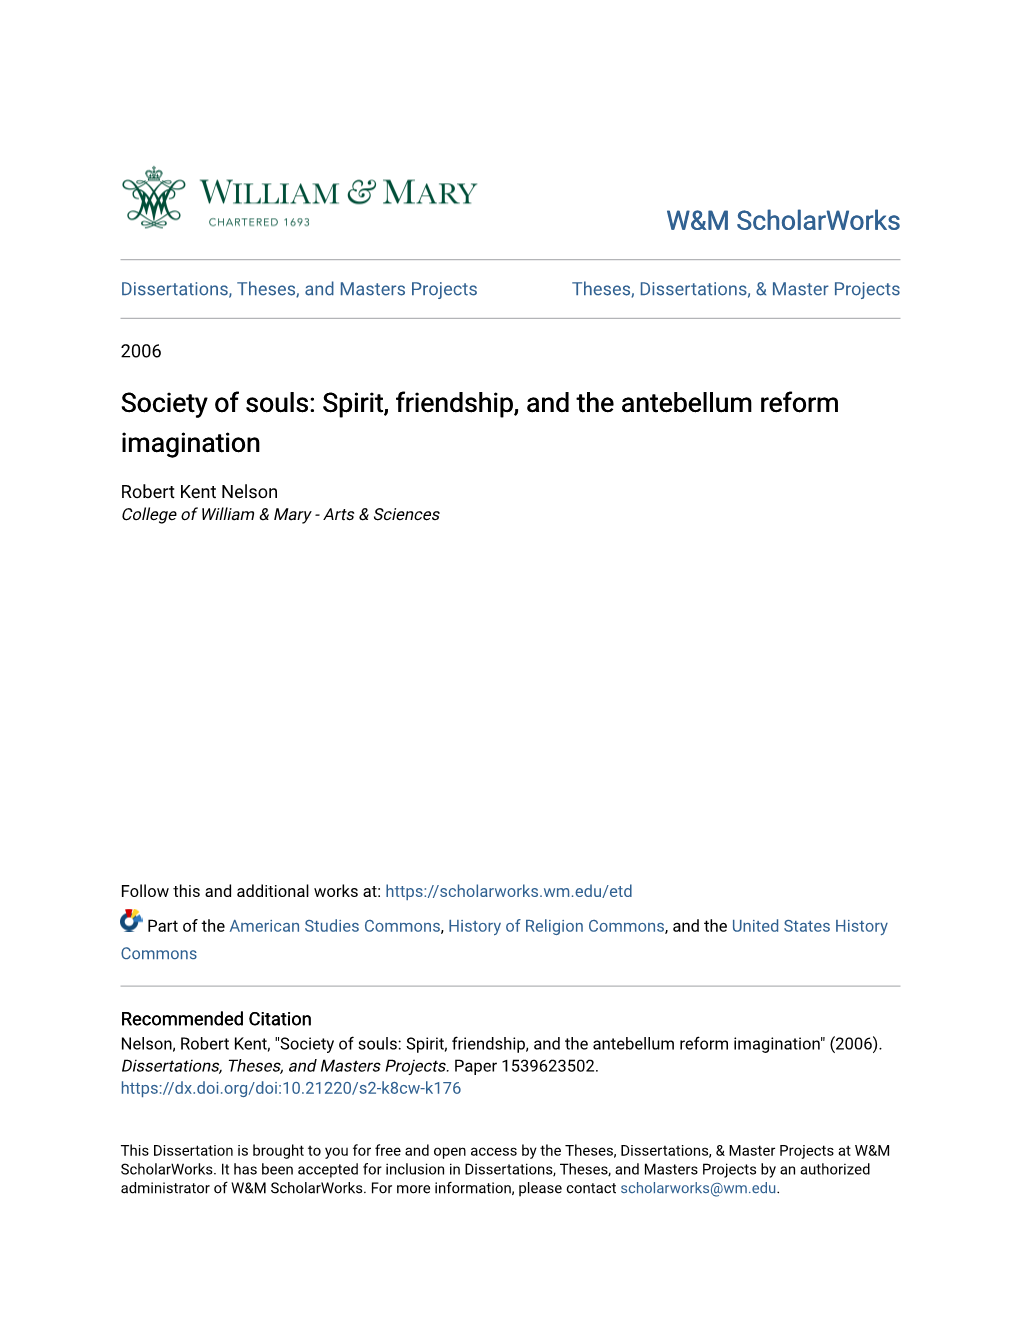 Spirit, Friendship, and the Antebellum Reform Imagination